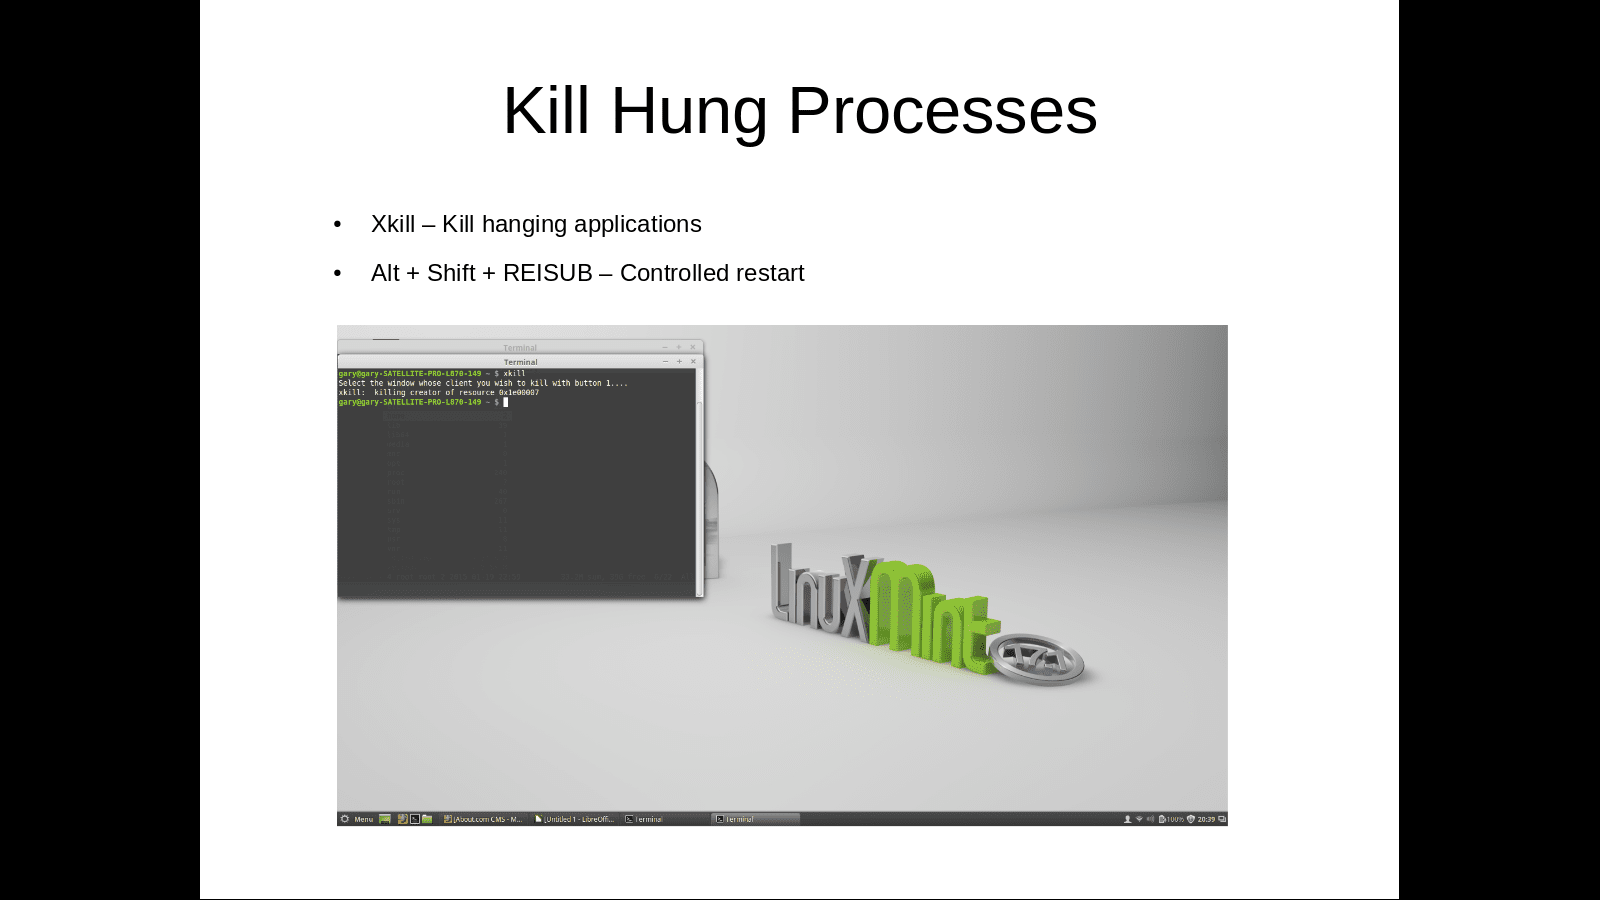 Dood Hung-processen met XKill